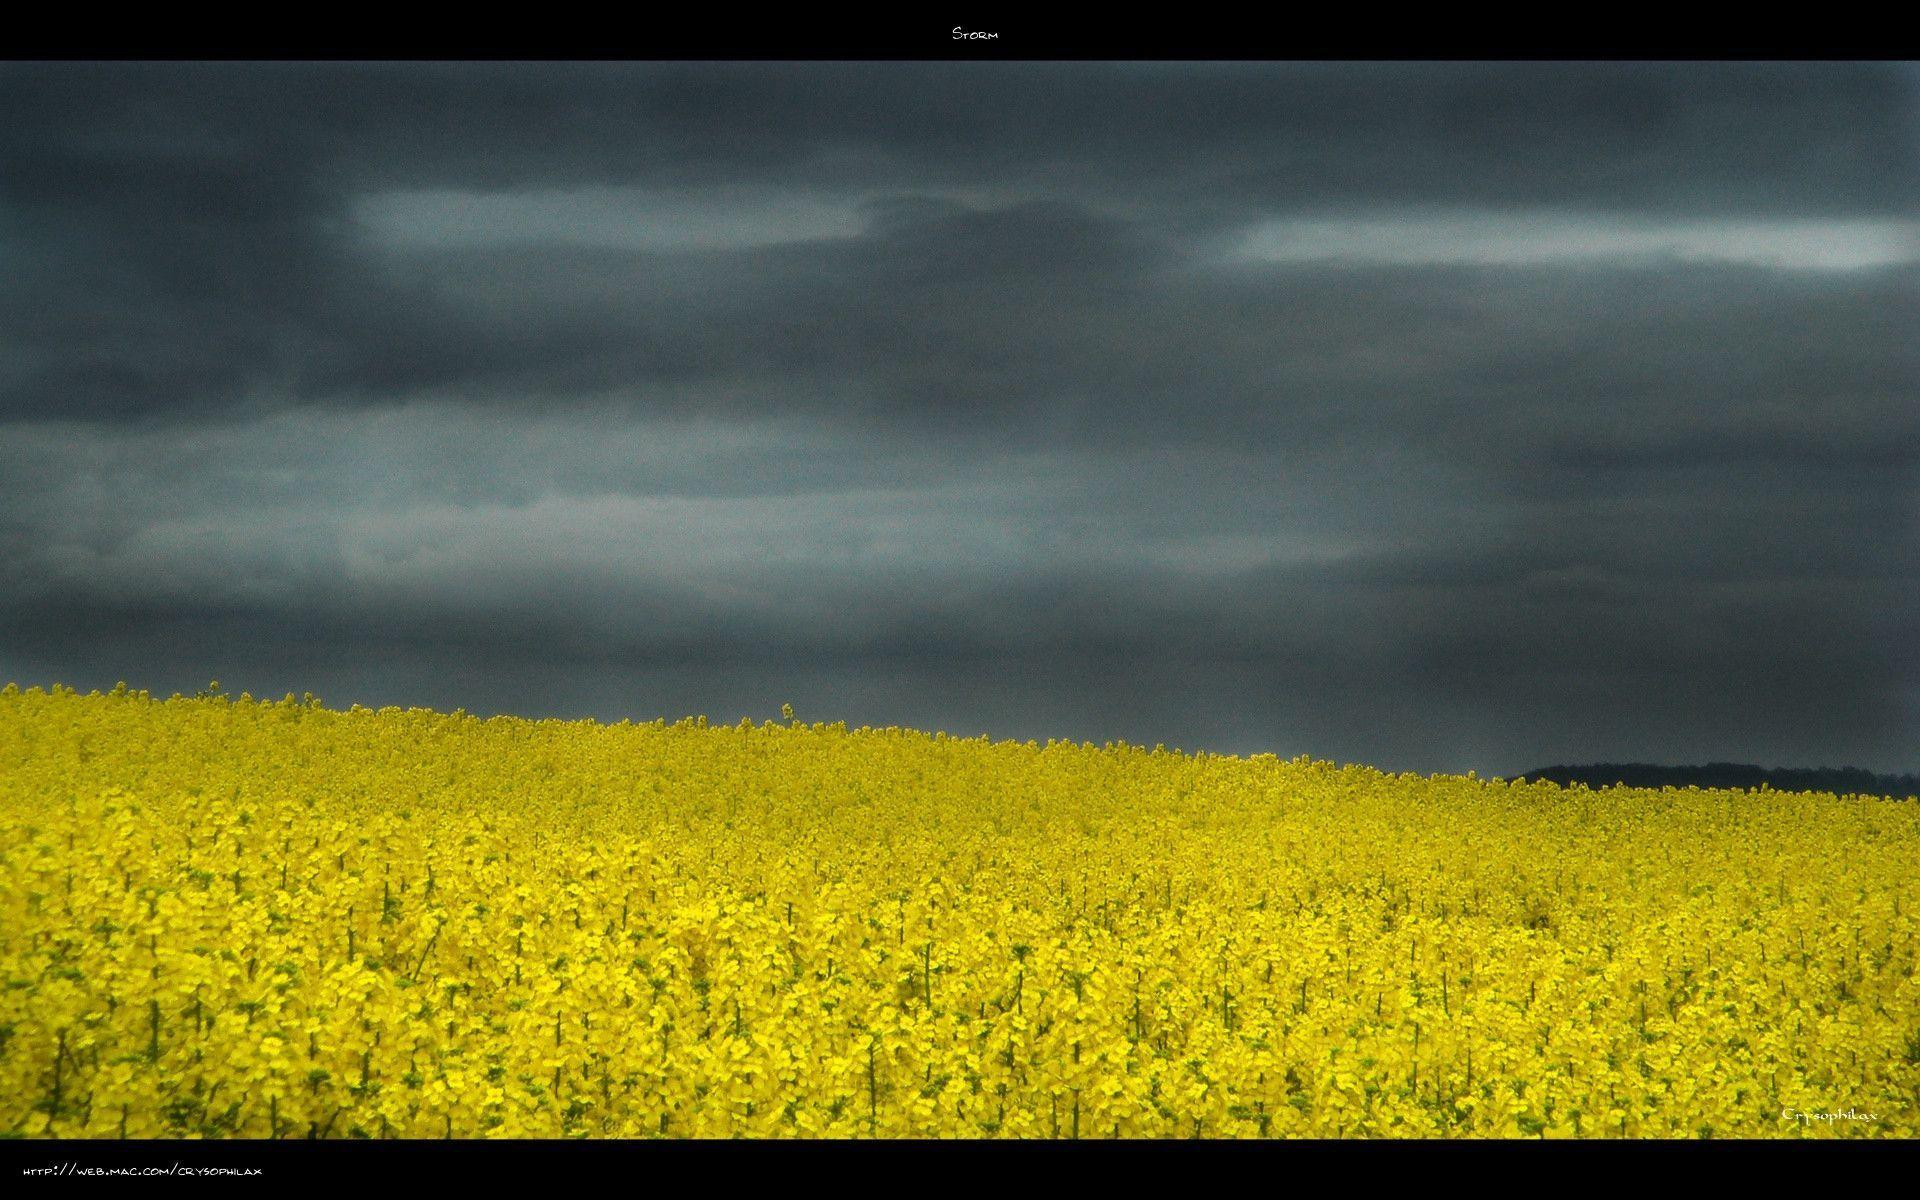 Storm desktop wallpaper background Image In HD